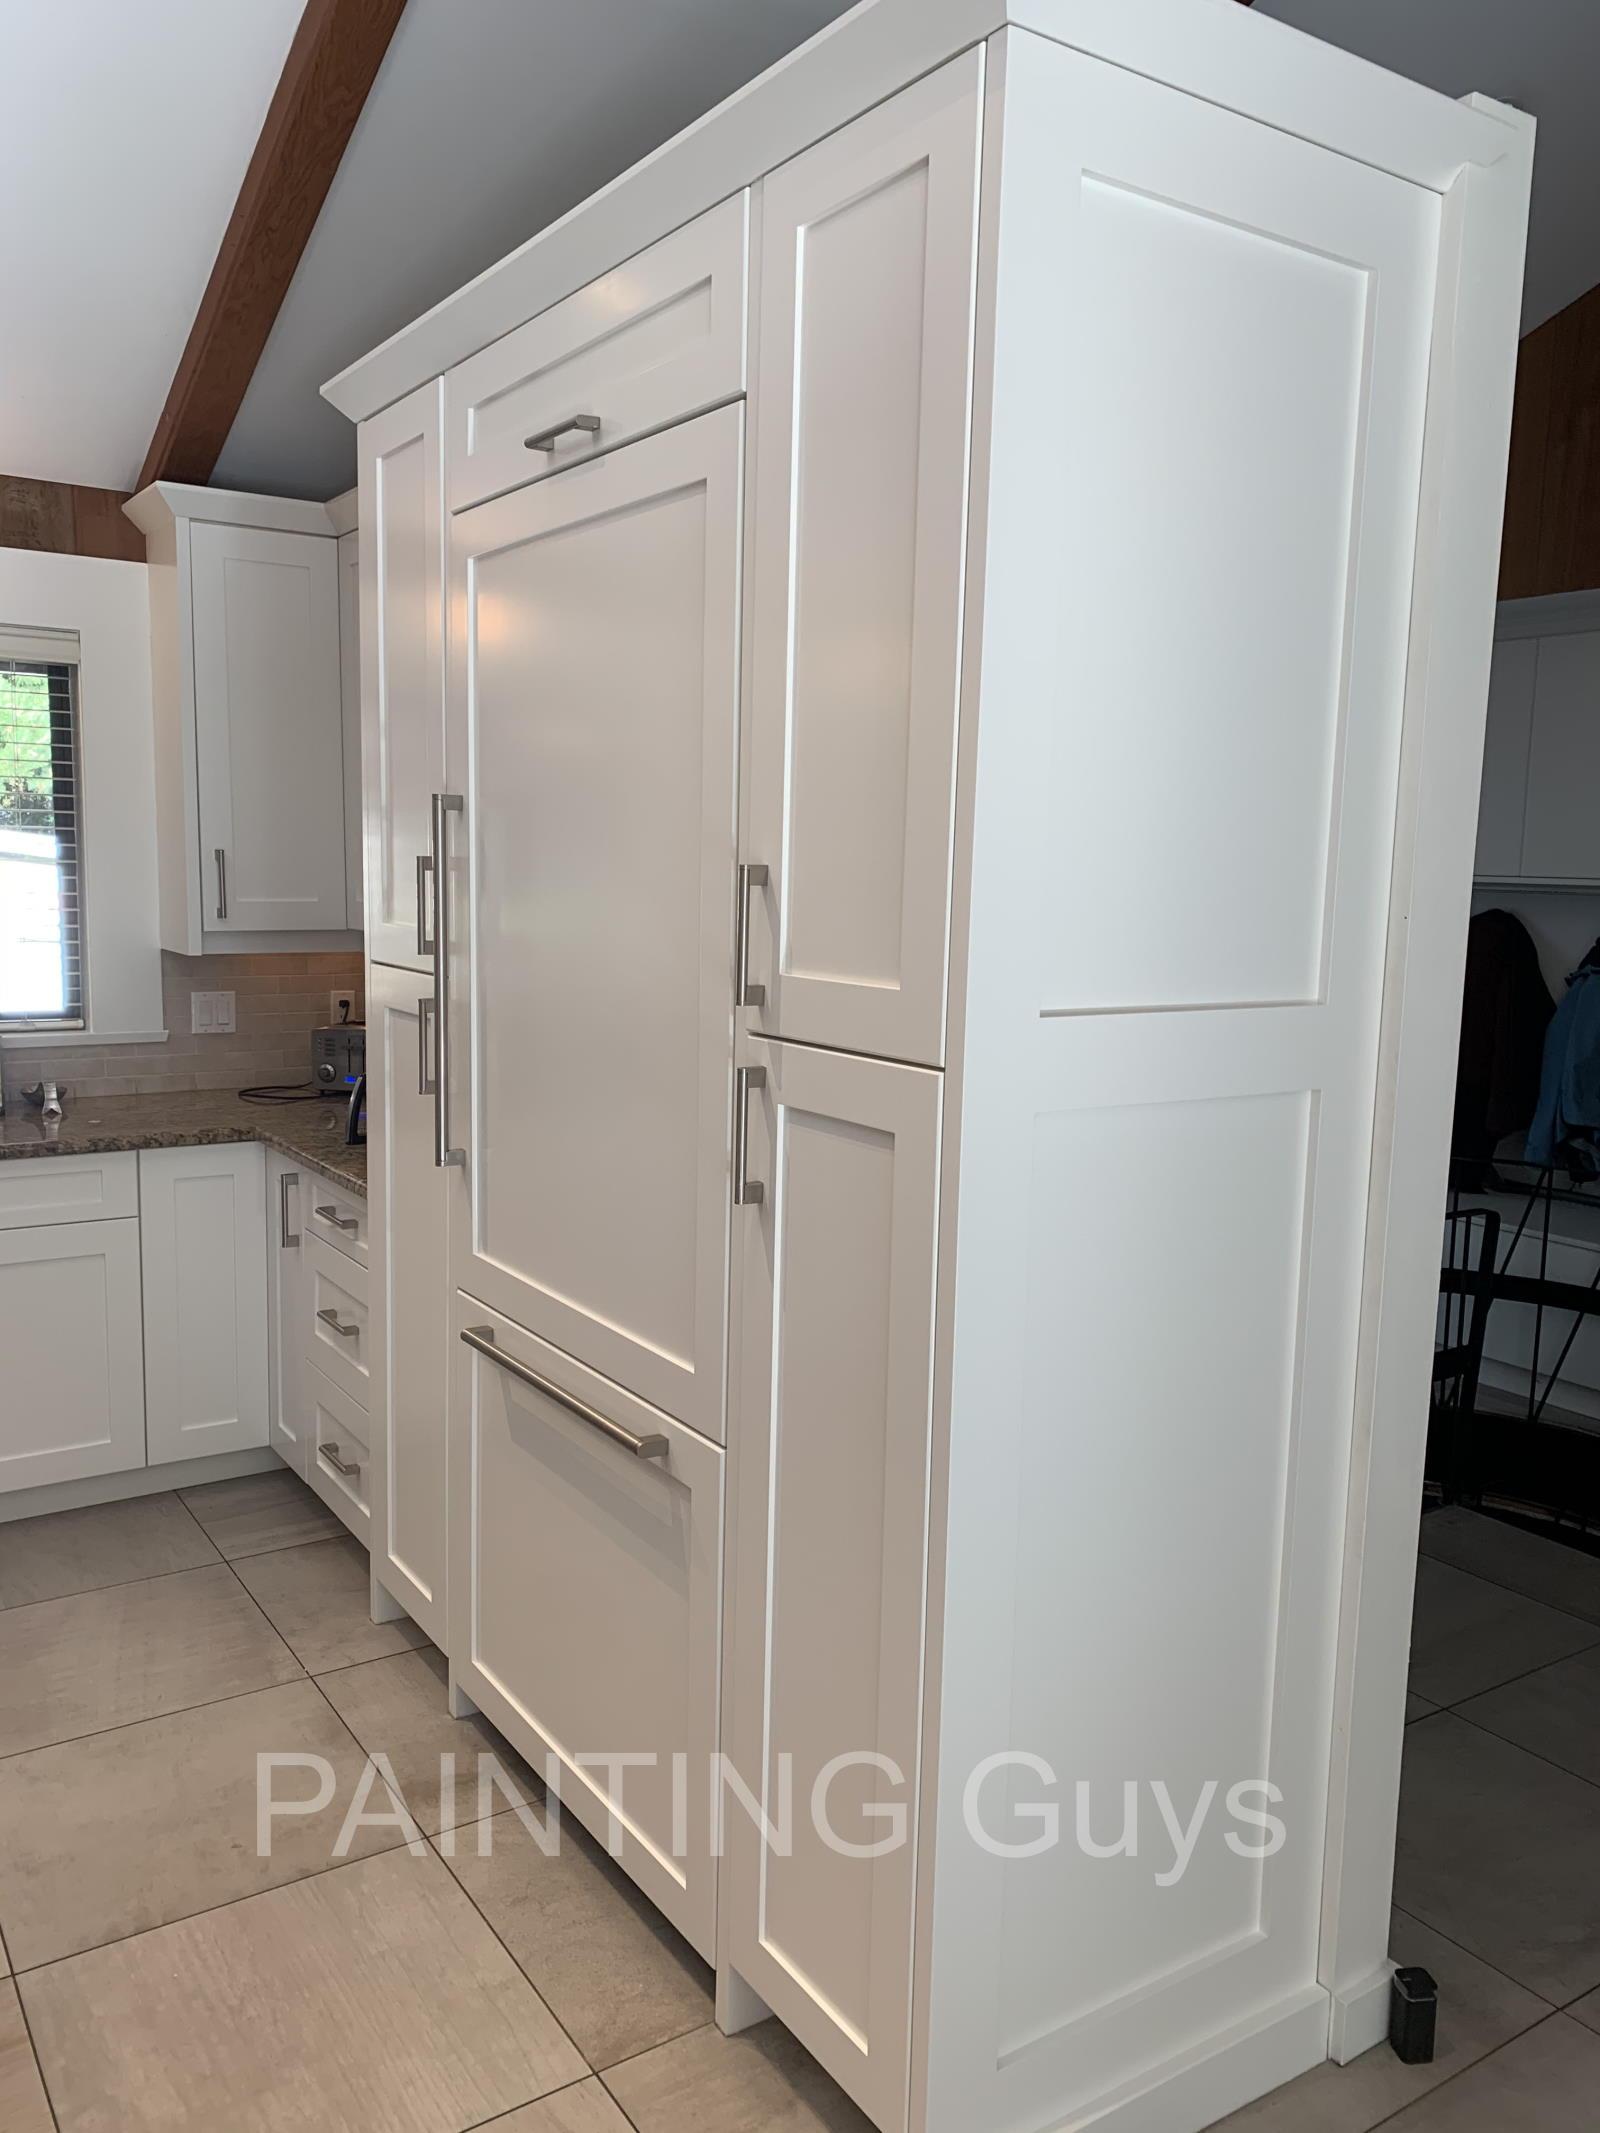 Painting built-in appliances refridgerators